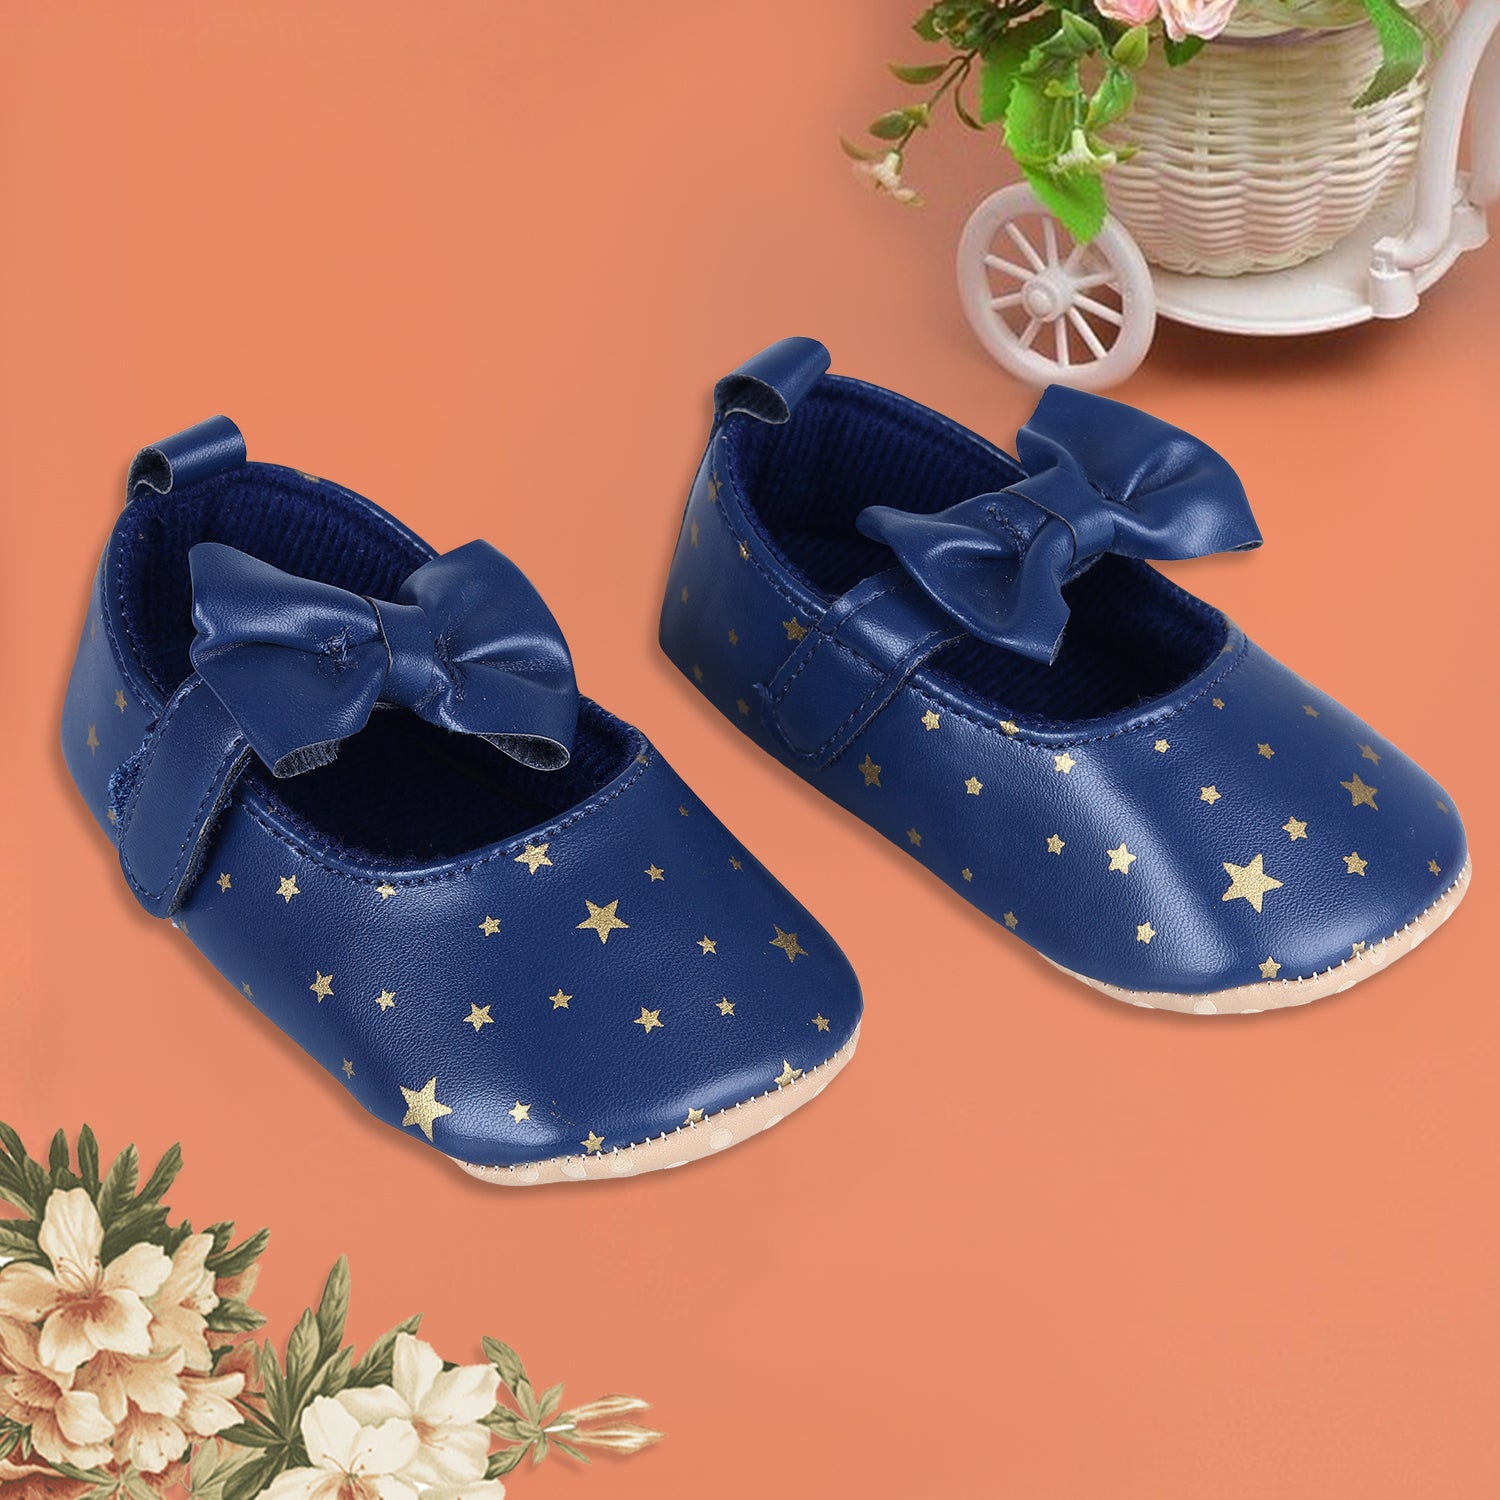 Baby Moo Star Premium Infant Girls Soft Anti-Slip Ballerina Shoes - Navy Blue